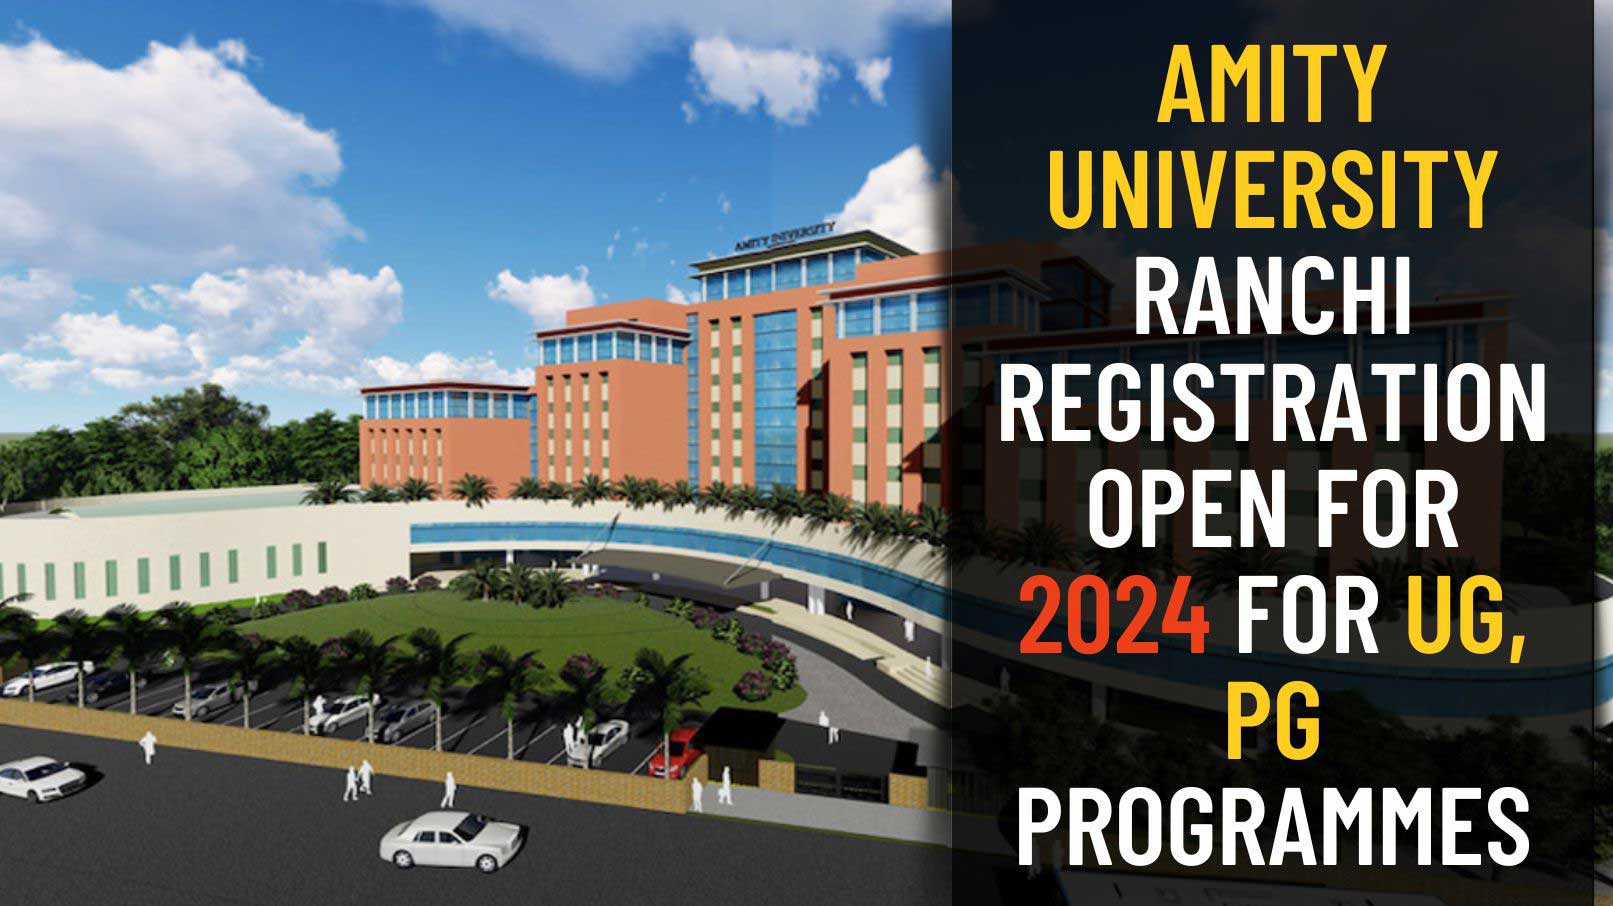 Amity University Ranchi Registration Open for 2024 for UG, PG Programmes